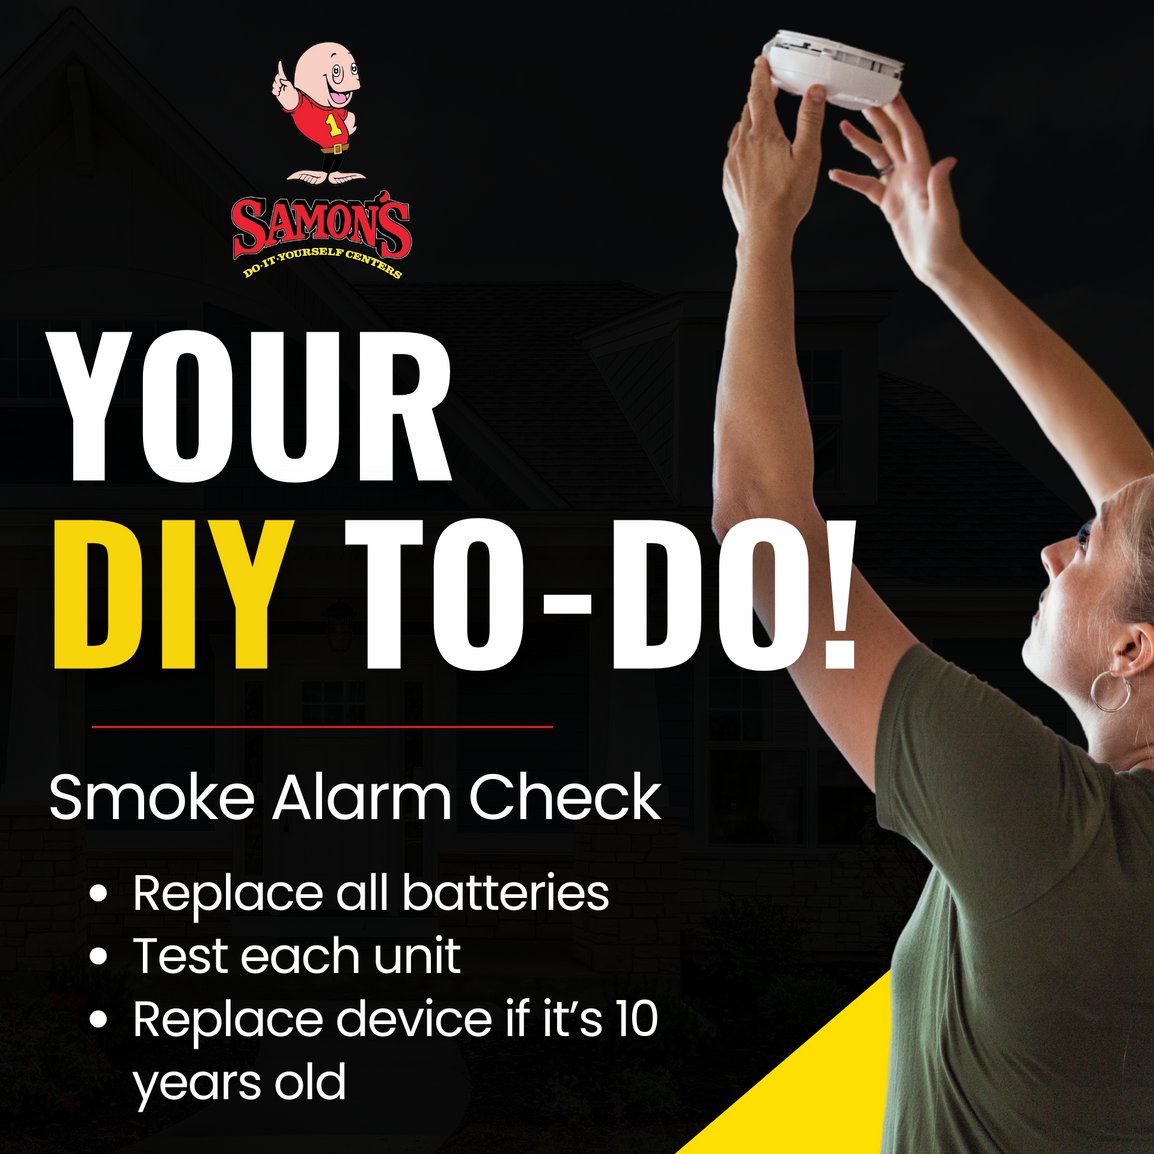 Don't forget your DIY safety to-do: 🔥 Check & update smoke alarms! 👷‍♀️✅

#SafetyFirst #SmokeAlarmCheck #HomeMaintenance #samonsdiy #diy #newmexico #homediy #diytips